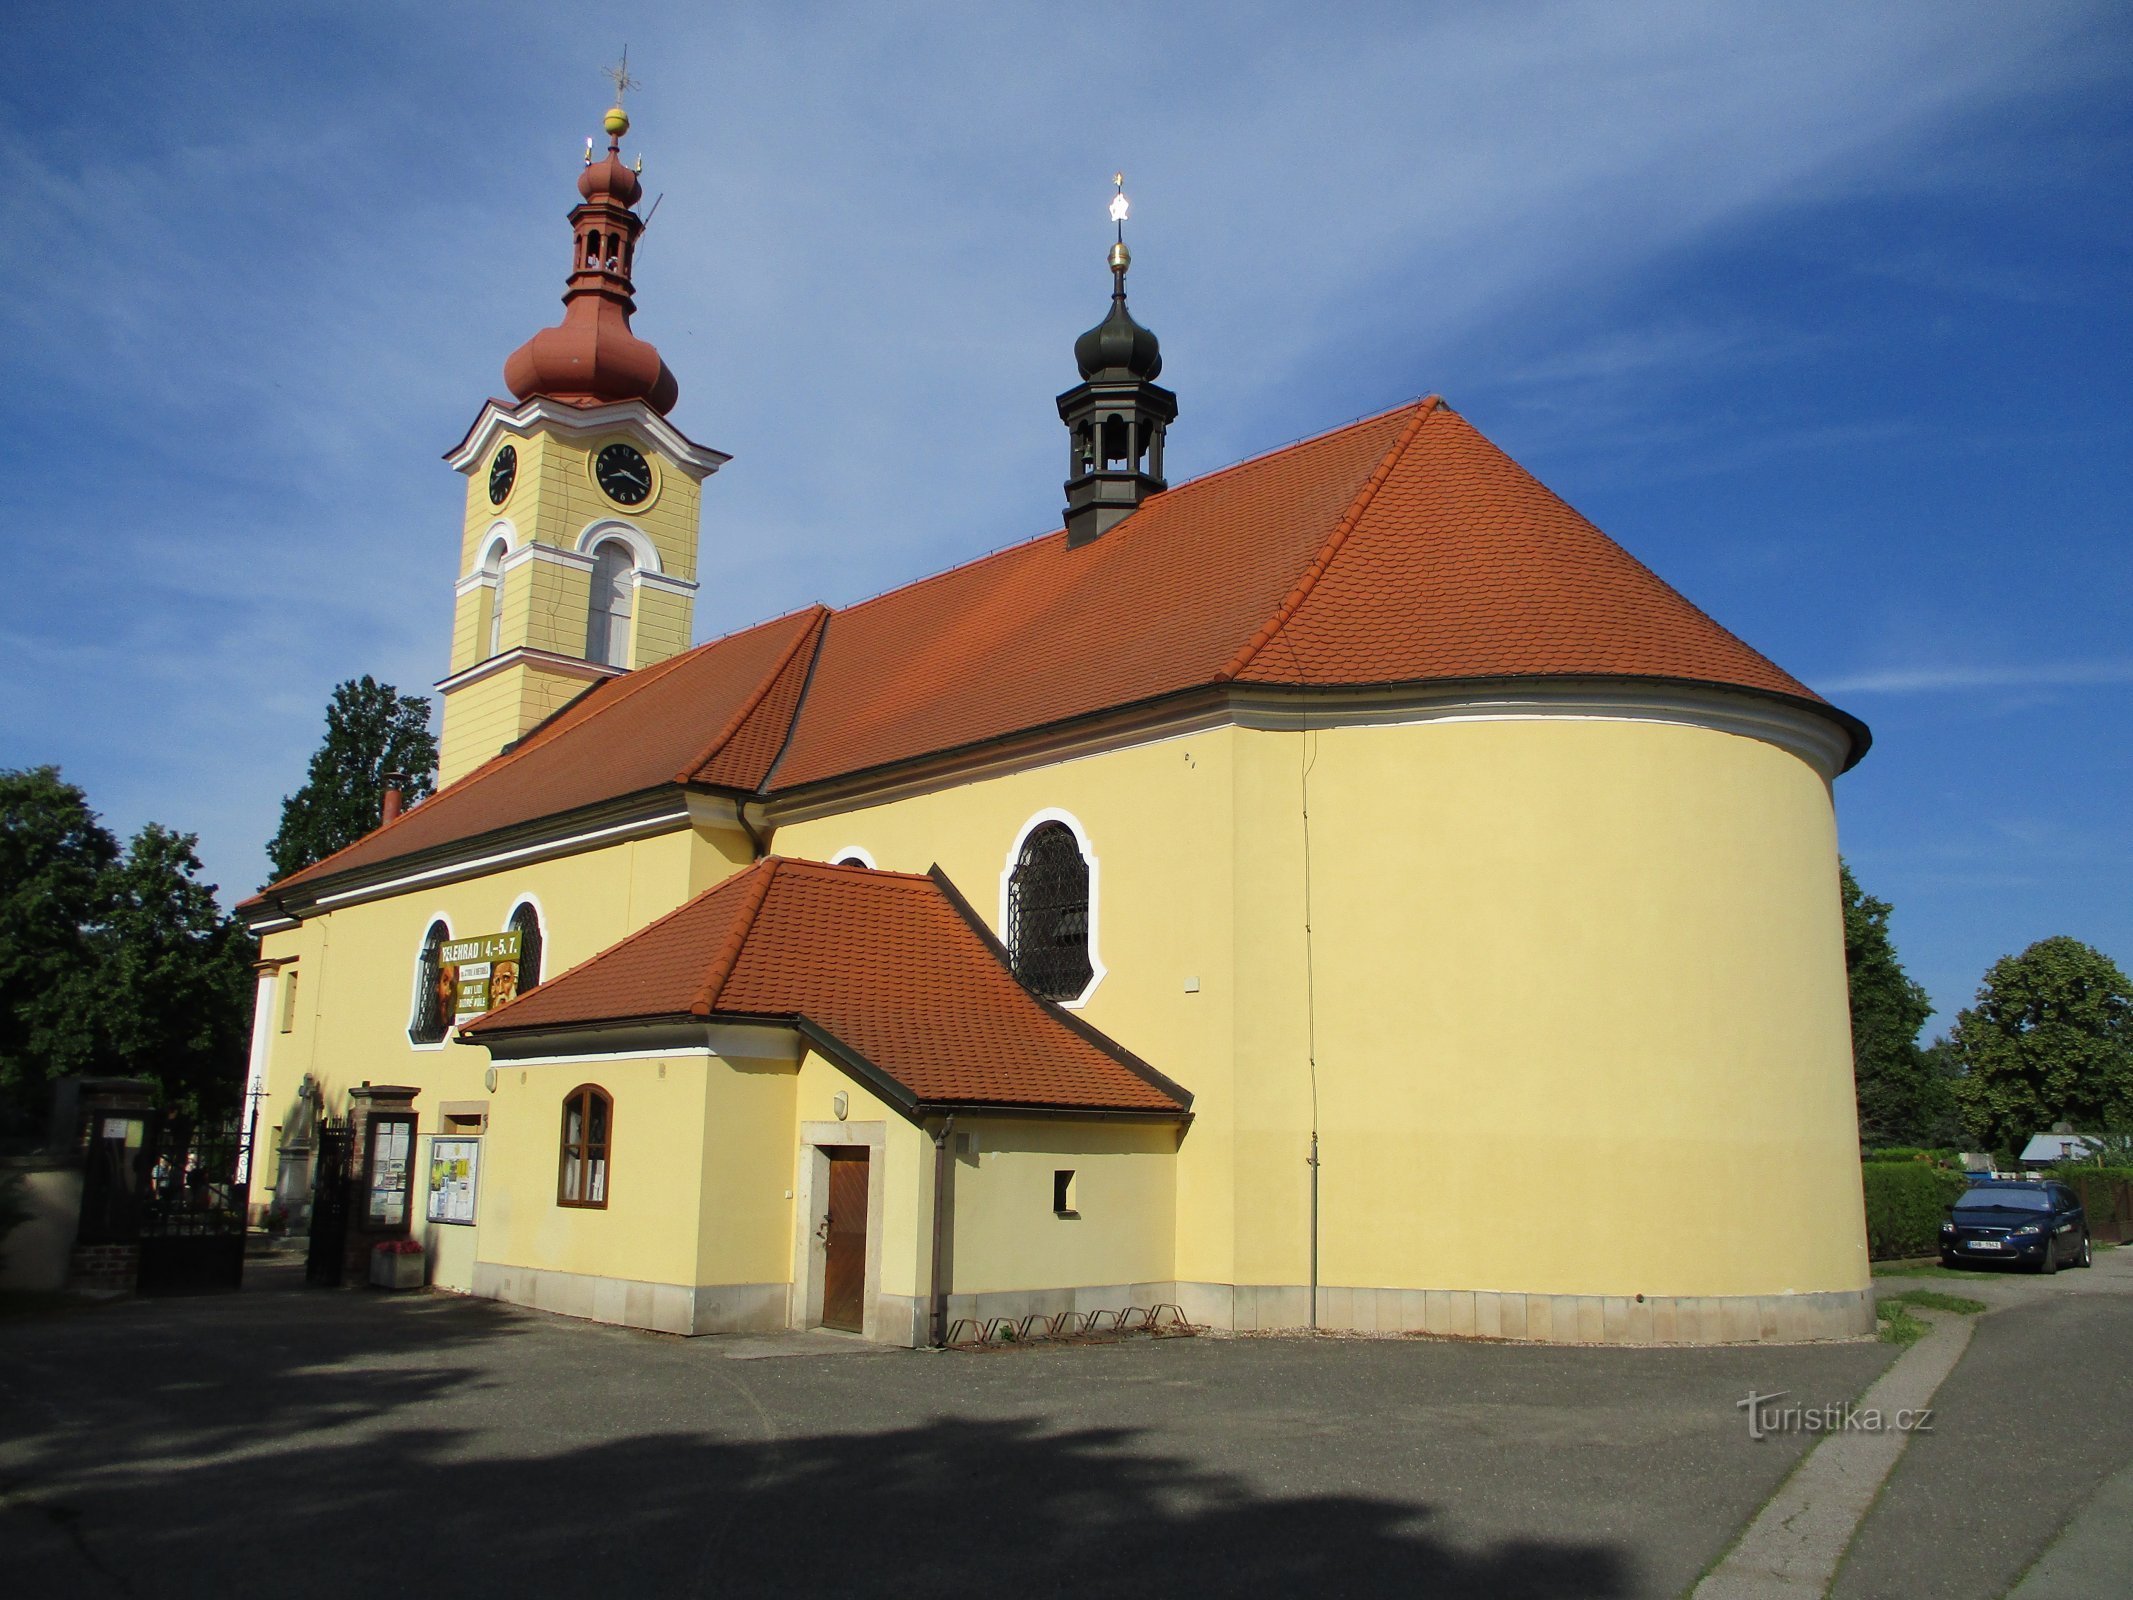 Nhà thờ St. Paul the Apostle ở Pouchov (Hradec Králové)